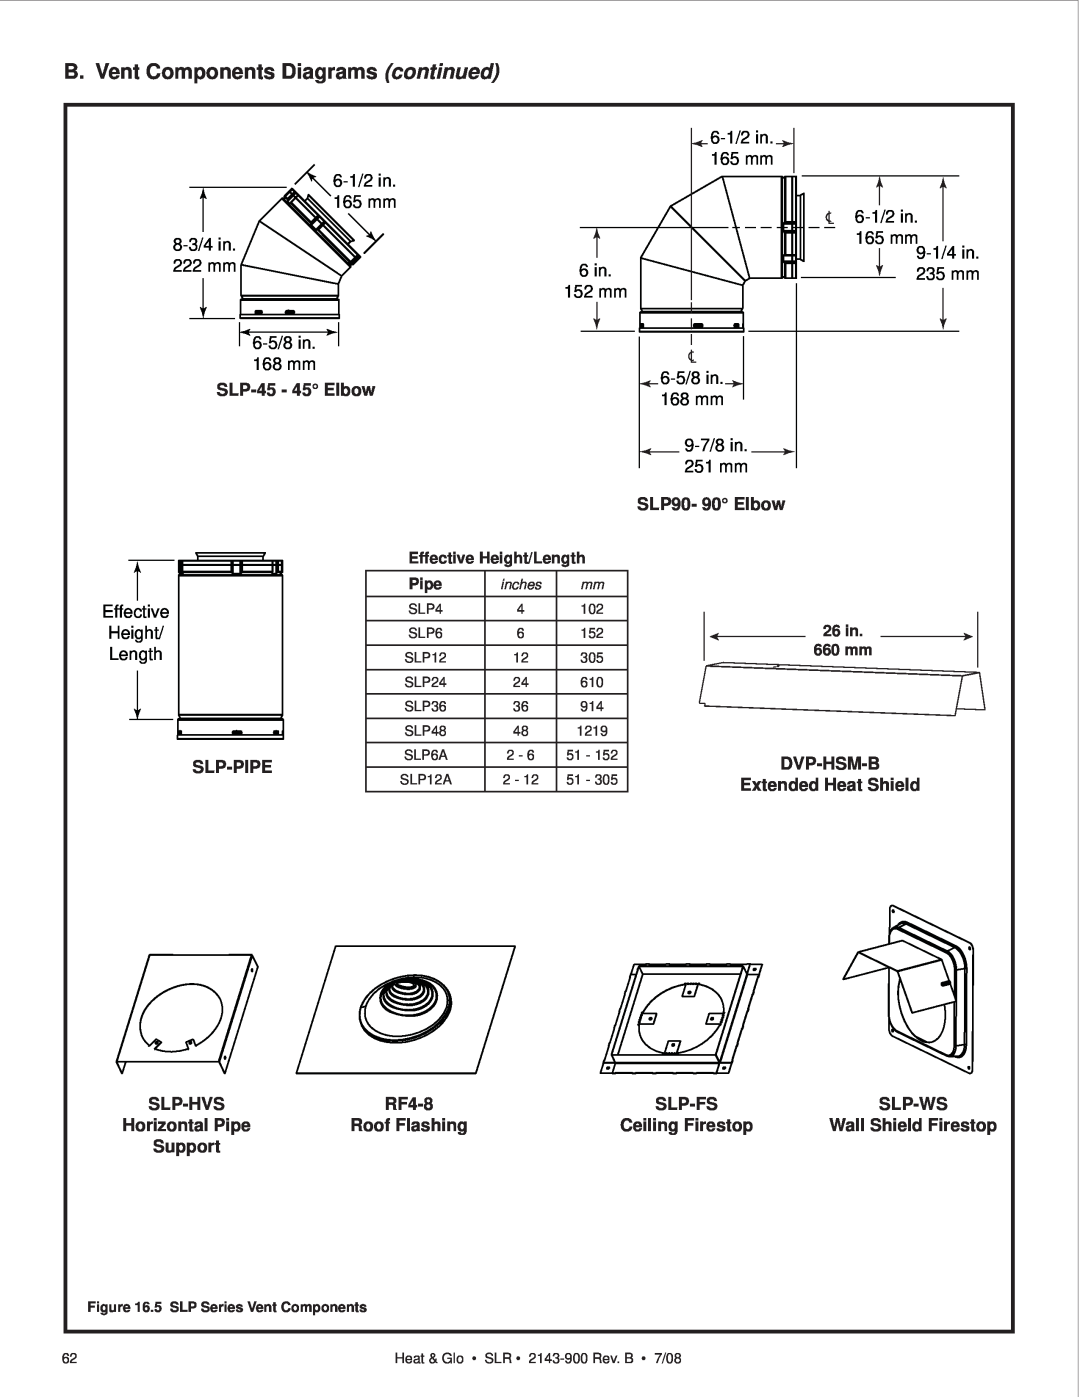 Heat & Glo LifeStyle SLR (COSMO) B. Vent Components Diagrams continued, SLP-45- 45 Elbow, SLP90- 90 Elbow, Effective 